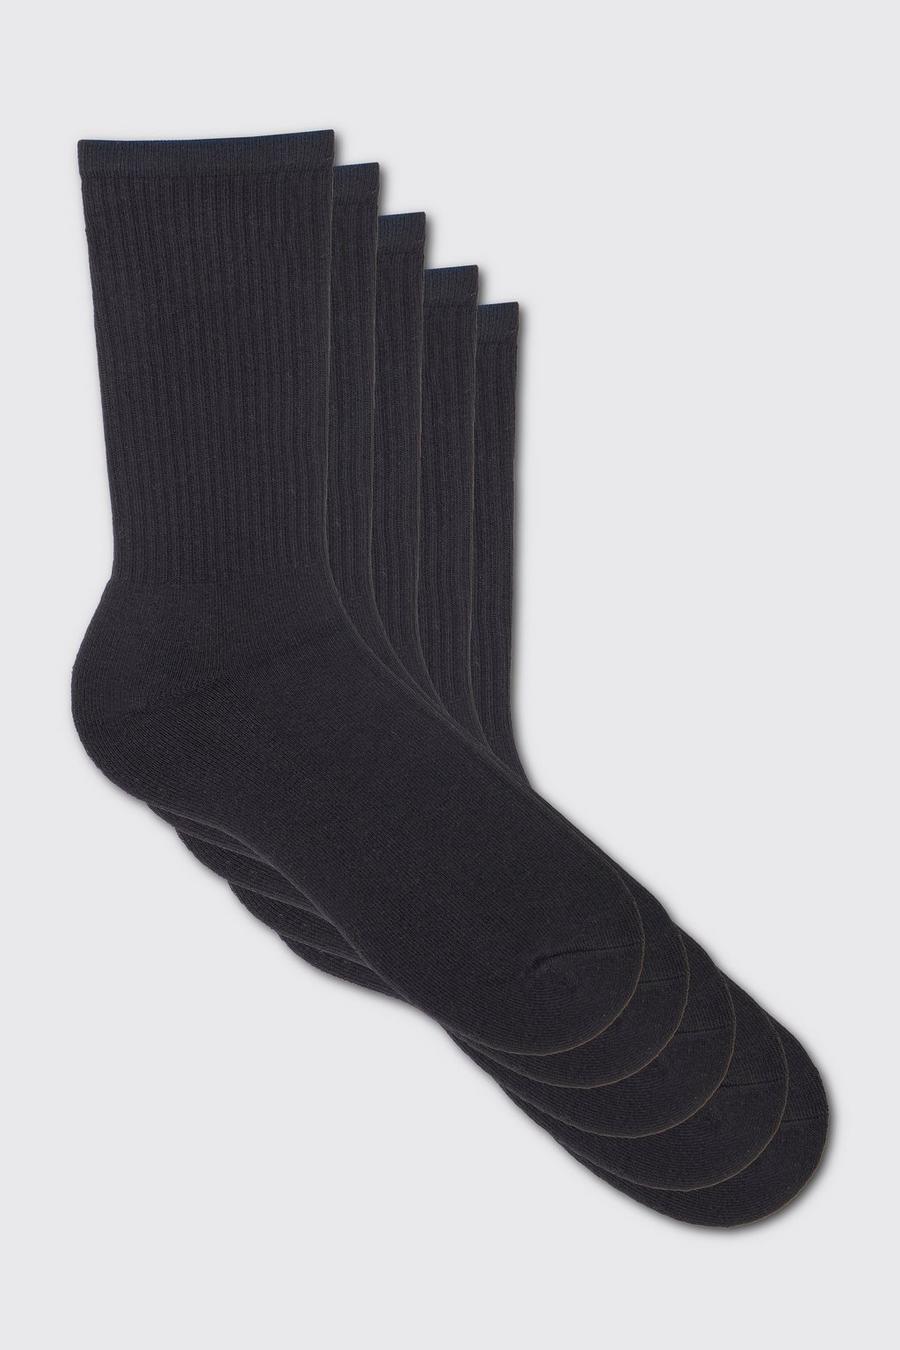 Black 5 Plain Sports Socks